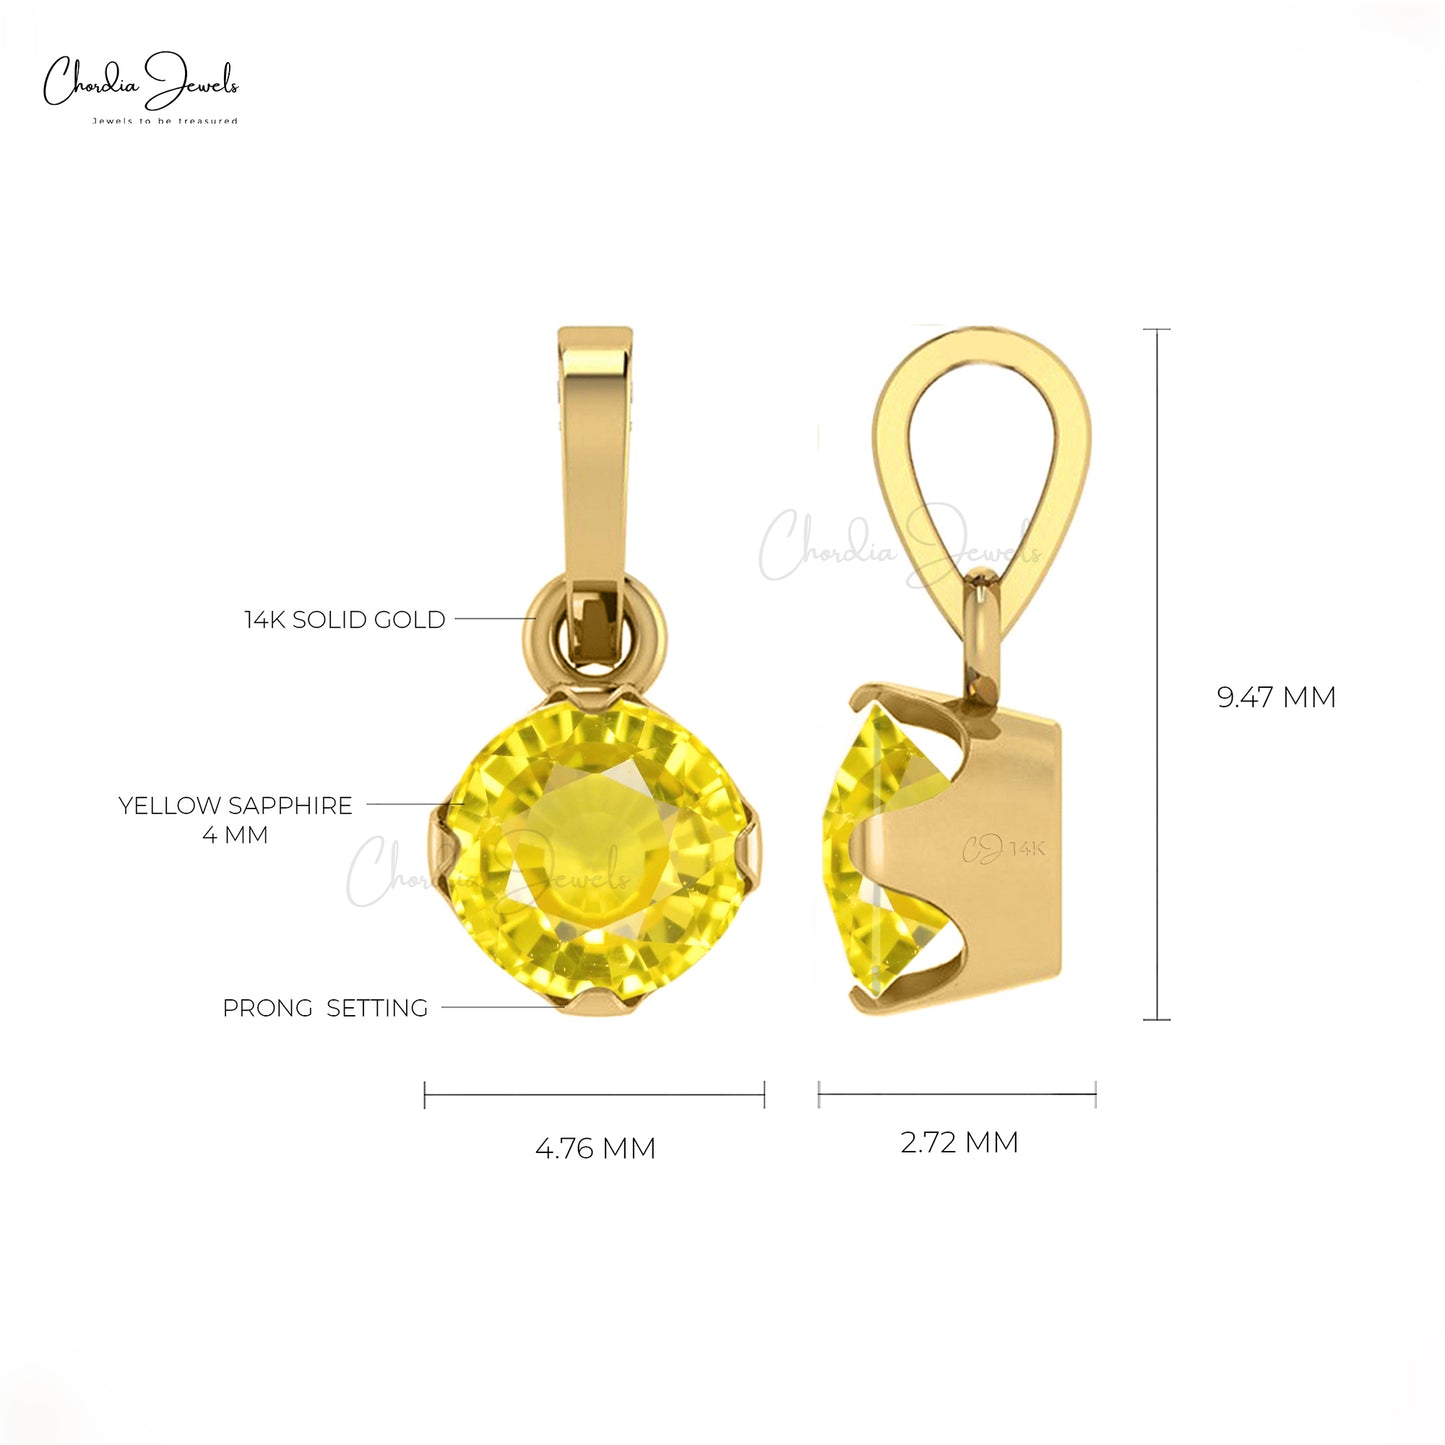 Yellow Sapphire Dainty Pendant 4mm Round Gemstone Minimalist Pendant Genuine 14k Real Gold Solitaire Pendant For Graduation Gift